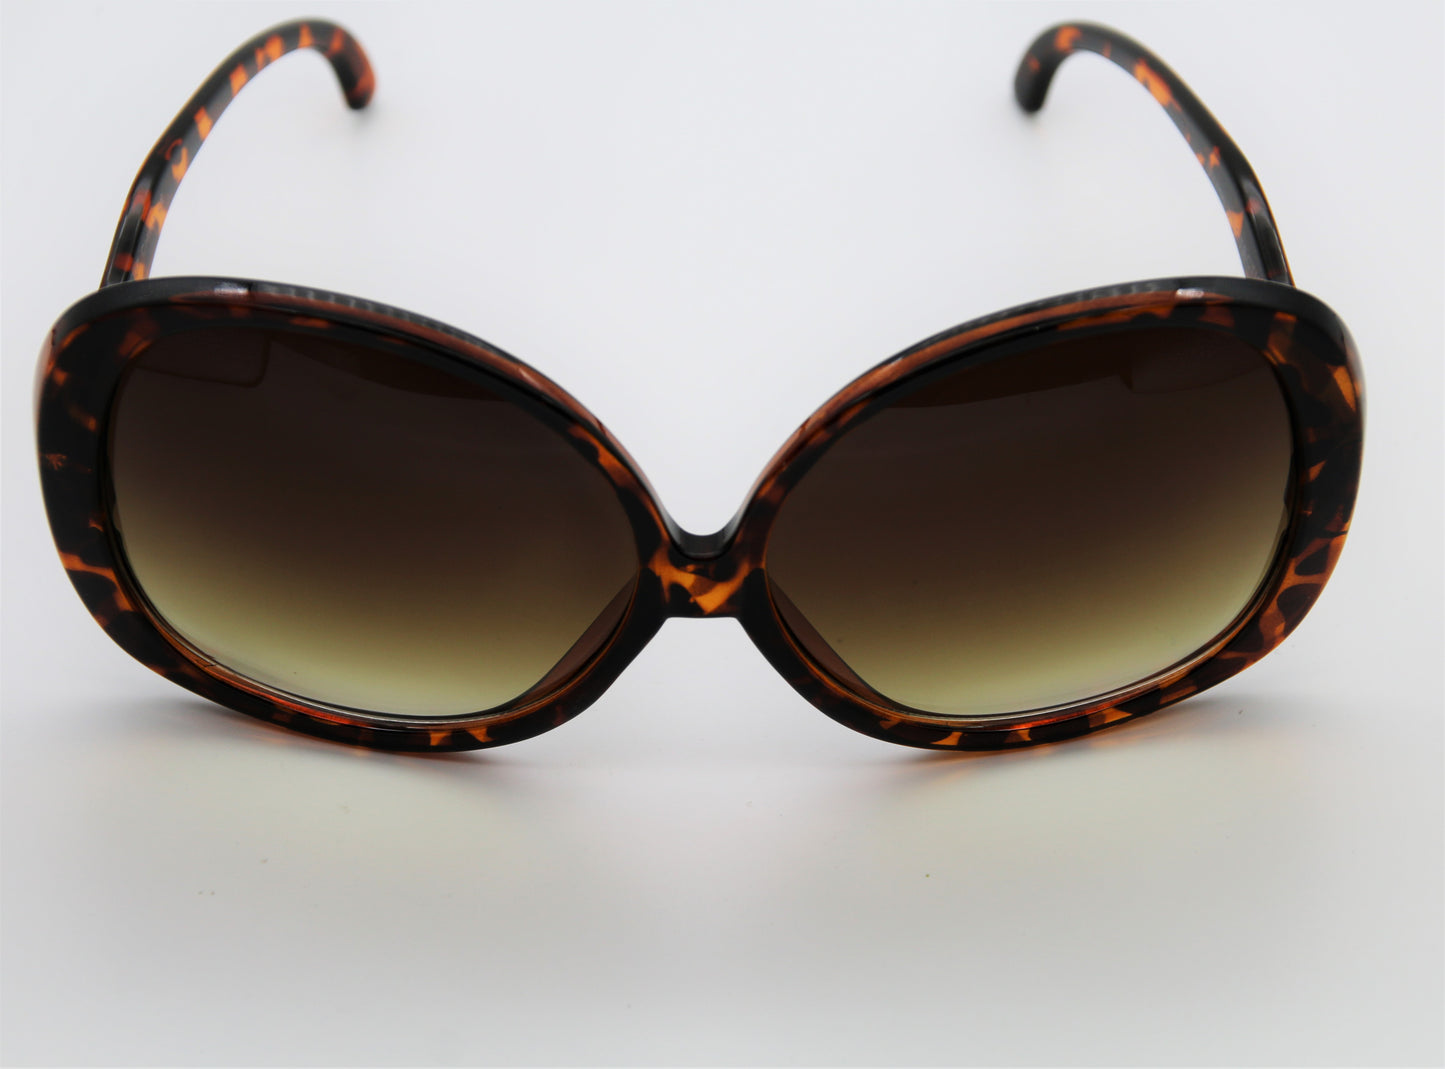 Unisex-Adult Large Oversized Oval  Vintage Smoke lens Sunglasses